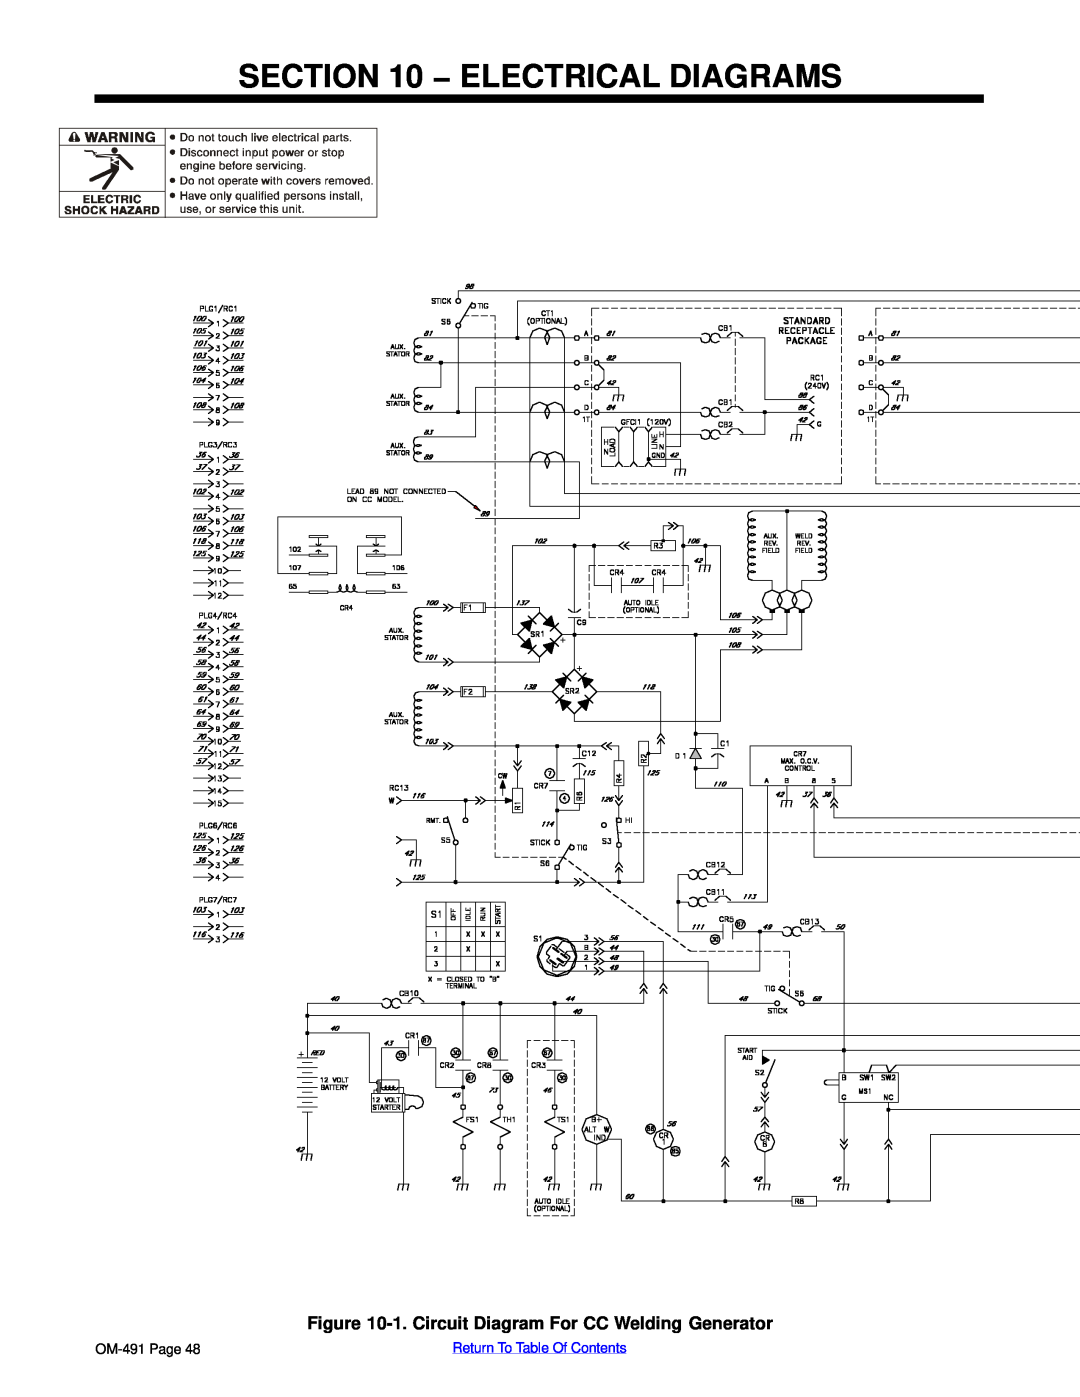 Miller Electric Big Blue 602P, Big Blue 402P manual Electrical Diagrams, 1. Circuit Diagram For CC Welding Generator 